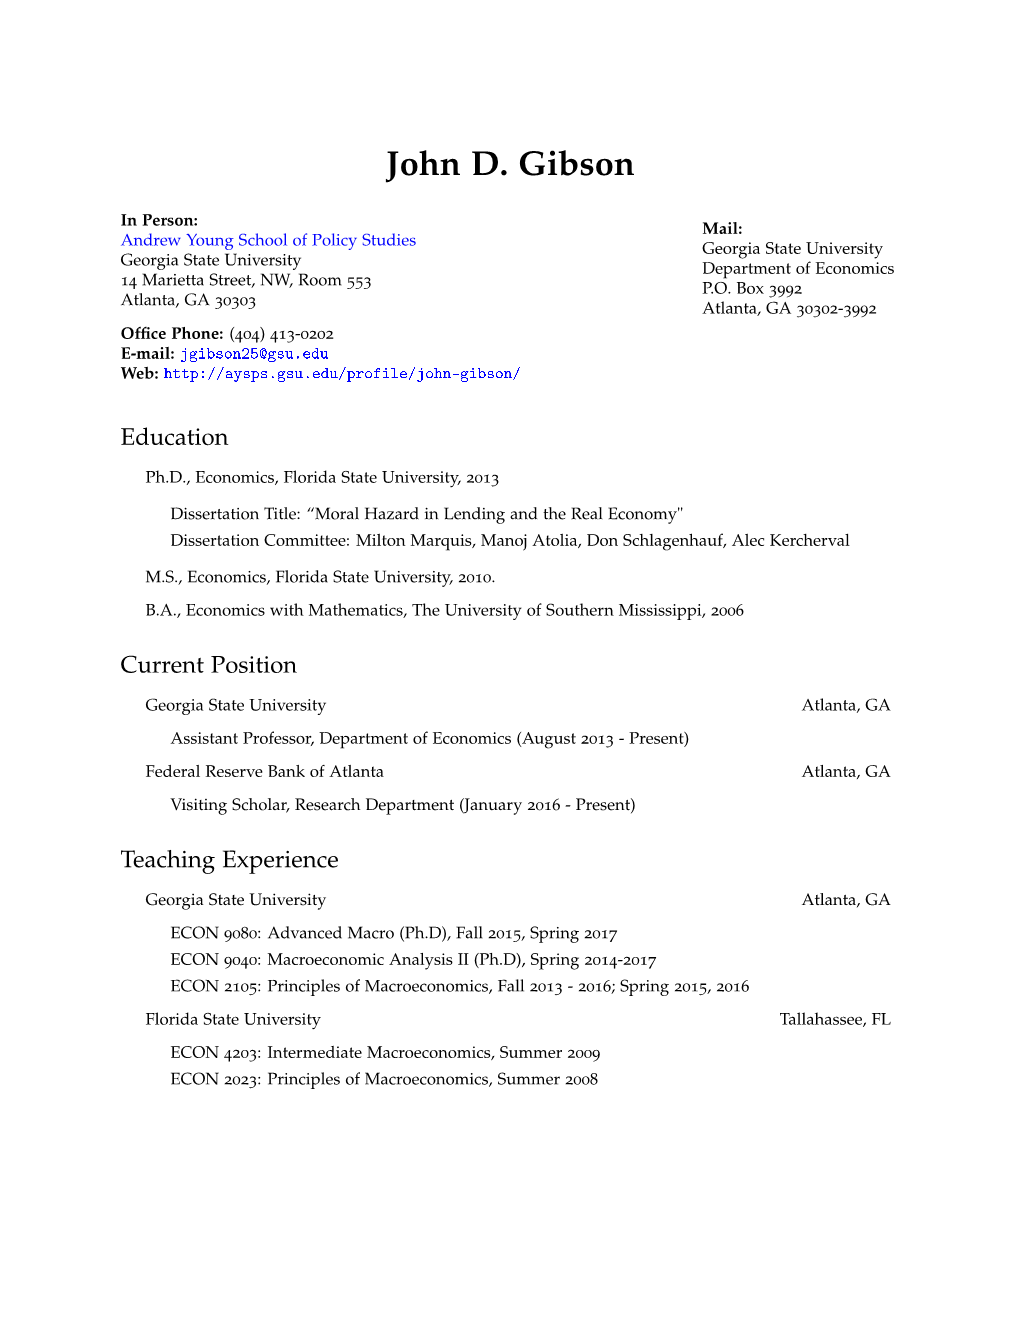 John D. Gibson: Curriculum Vitae